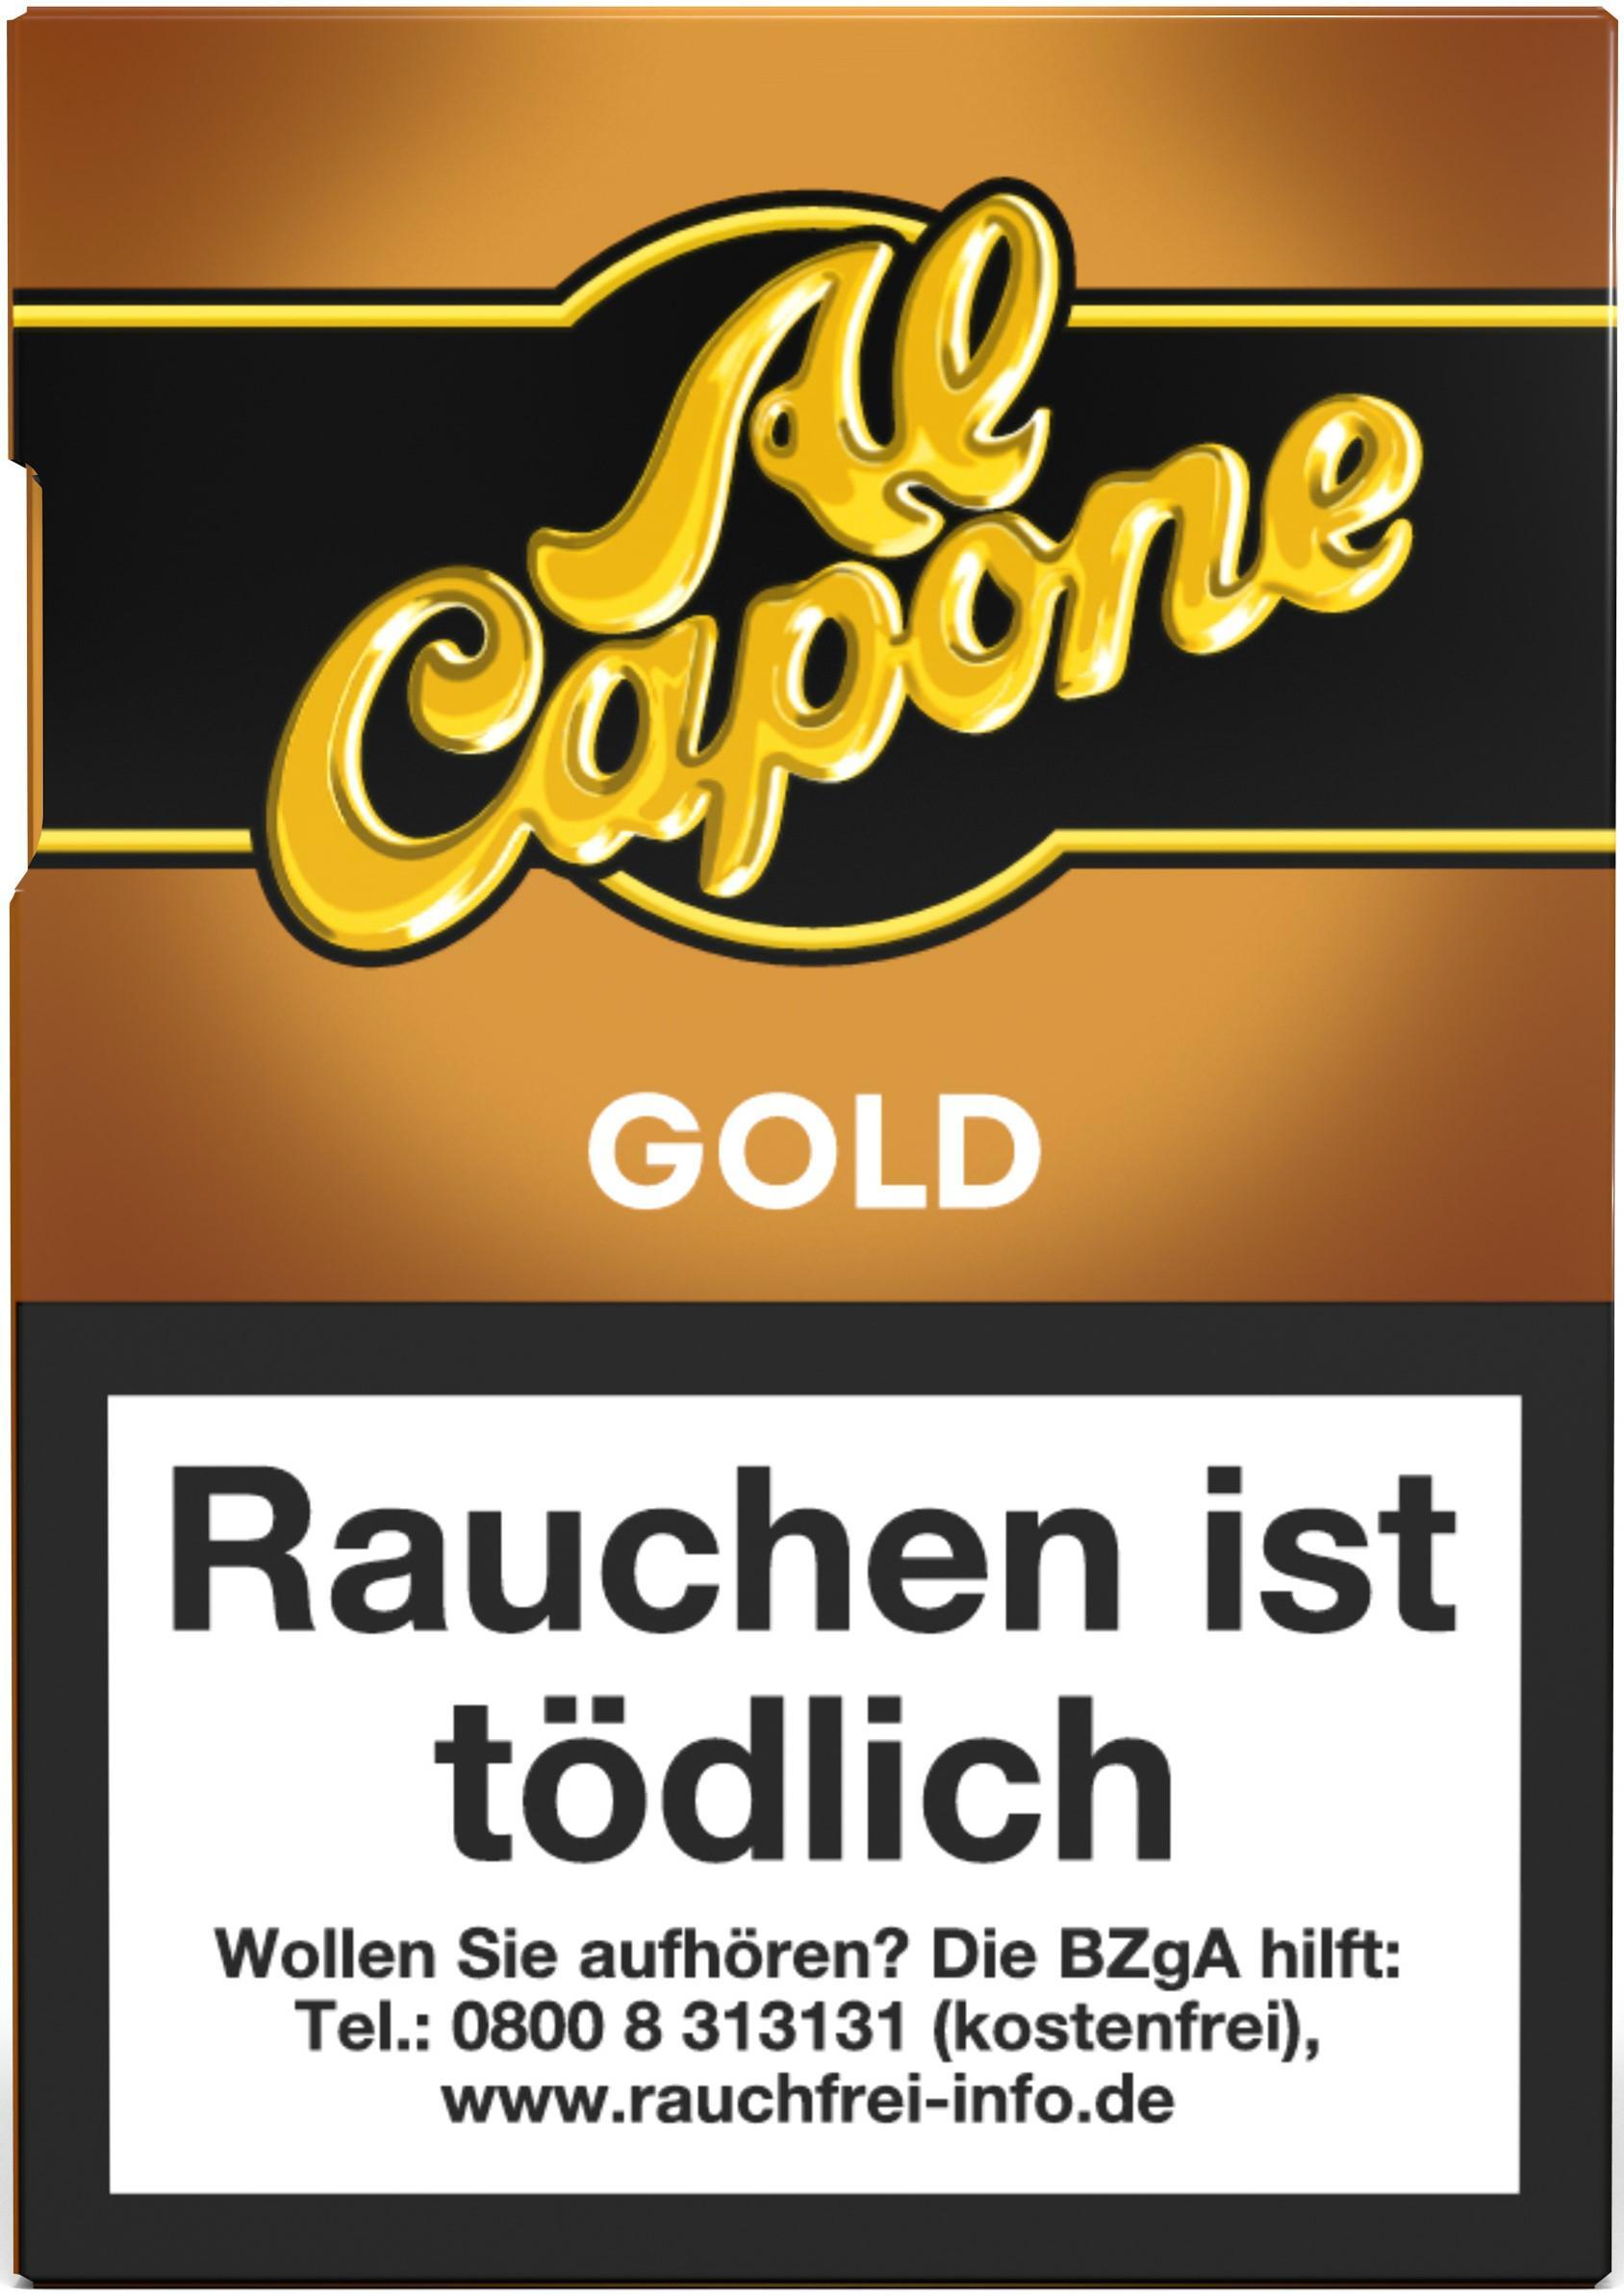 Al Capone Pockets Gold Filter (Irish Coffee)